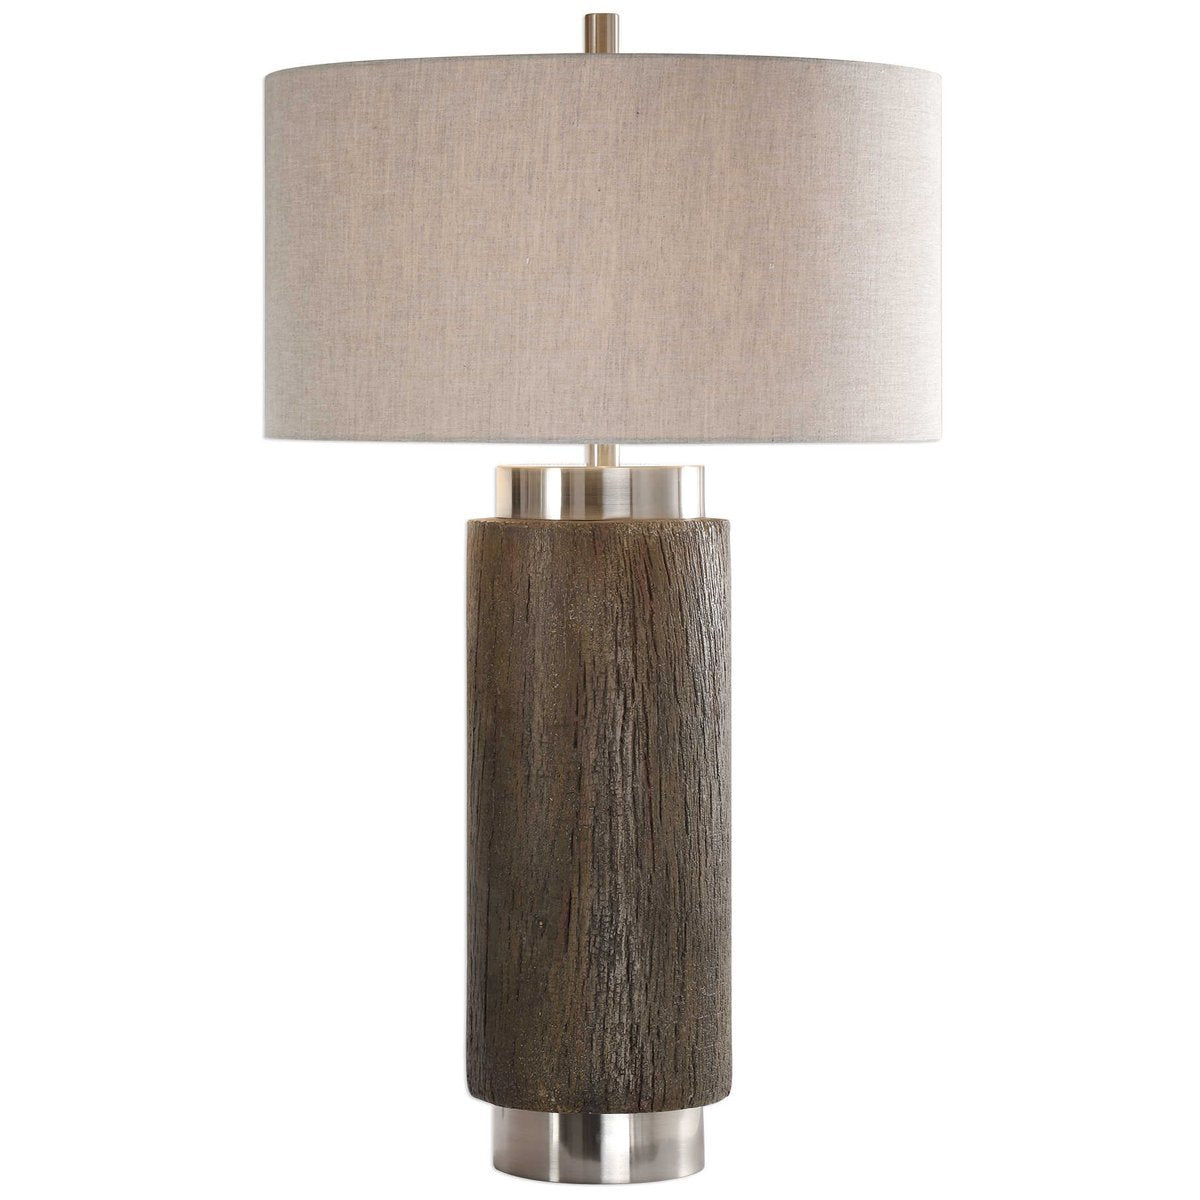 Uttermost Cheraw Wood Cylinder Lamp